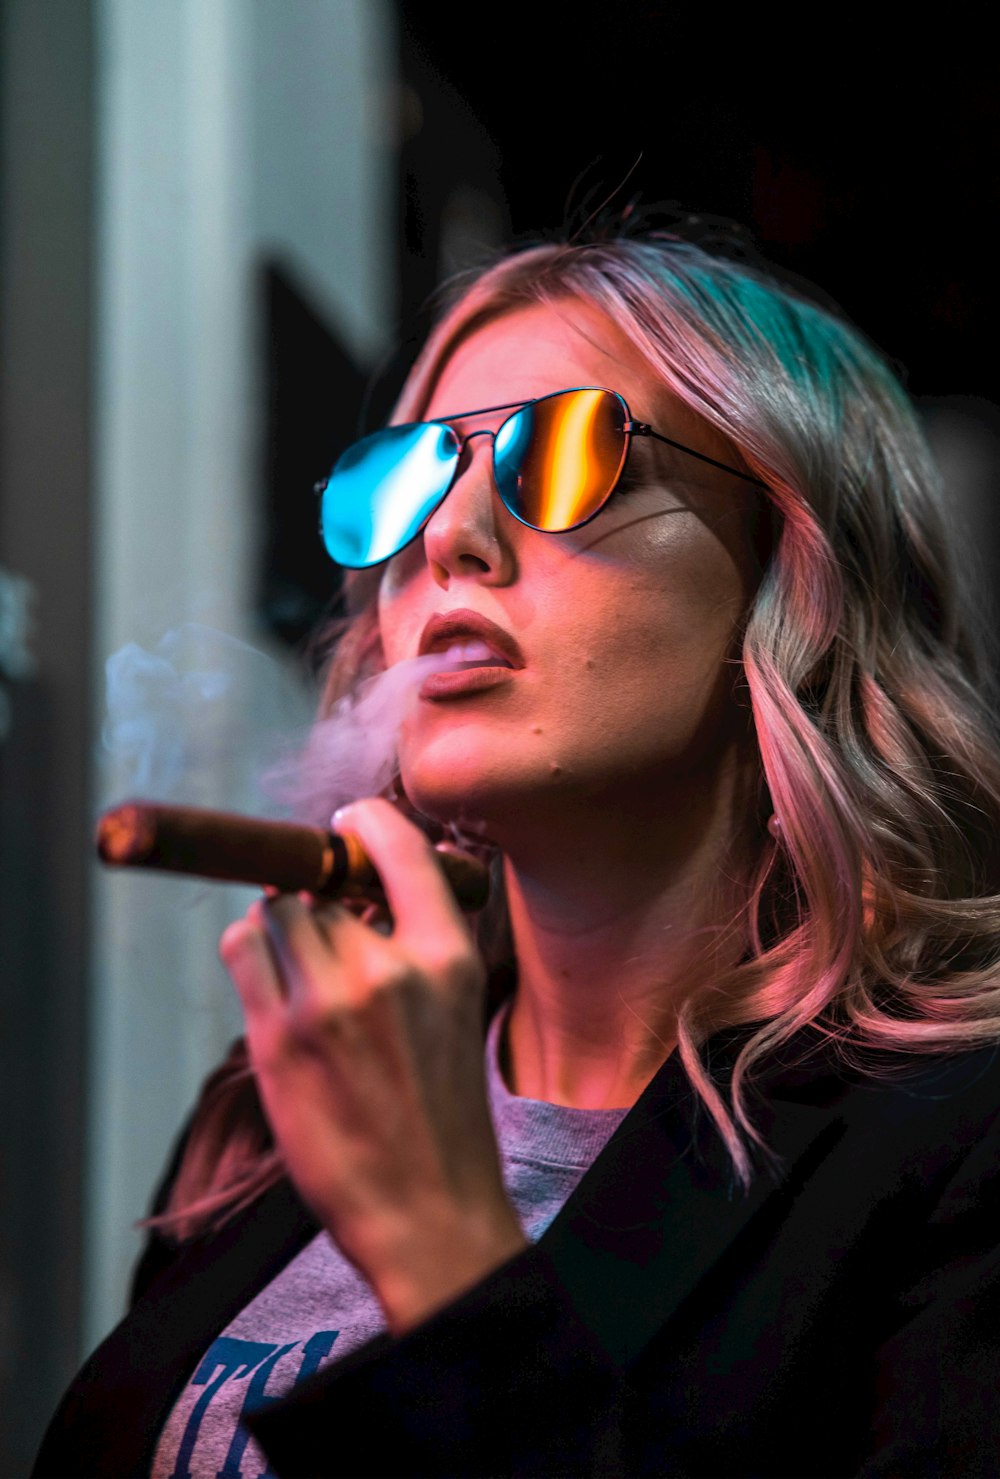 a woman smoking a cigarette wearing sunglasses